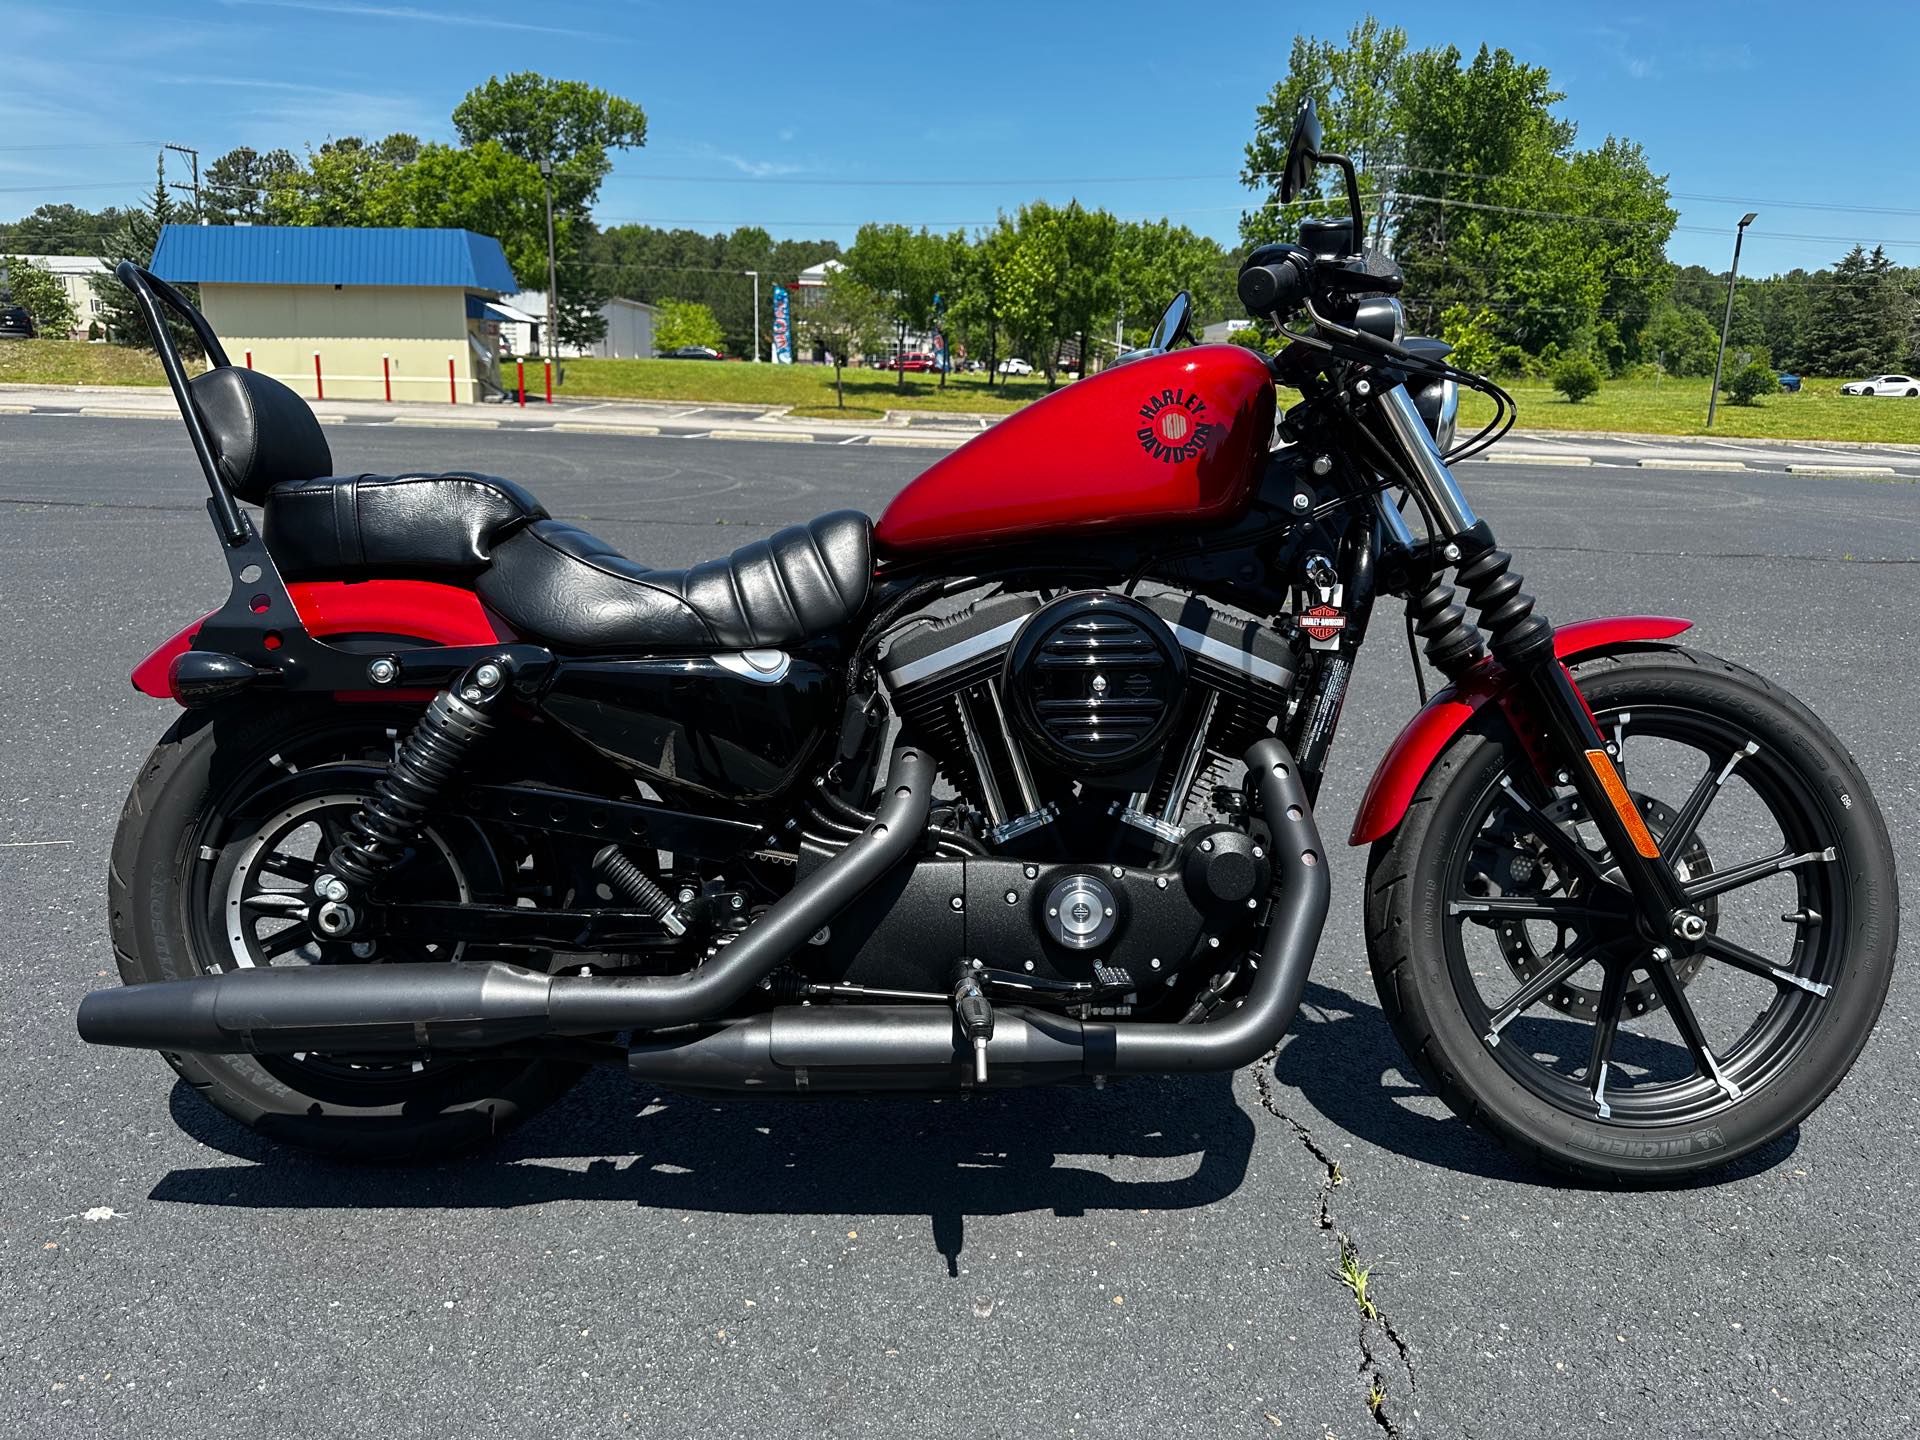 2019 Harley-Davidson Sportster Iron 883 at Steel Horse Harley-Davidson®